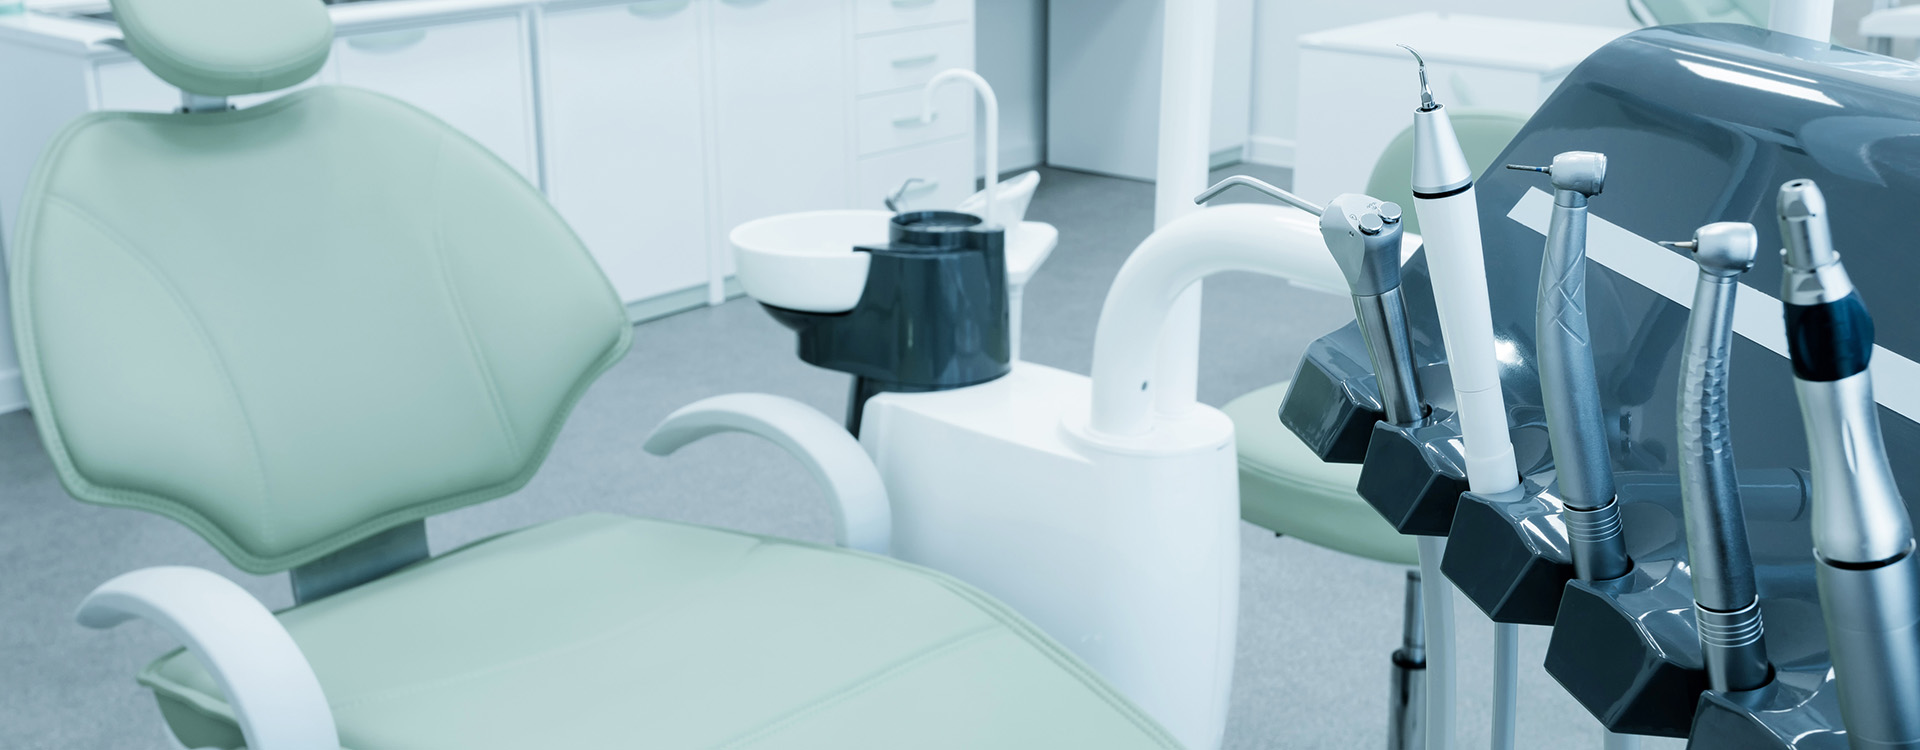 Modern dental office and equipment